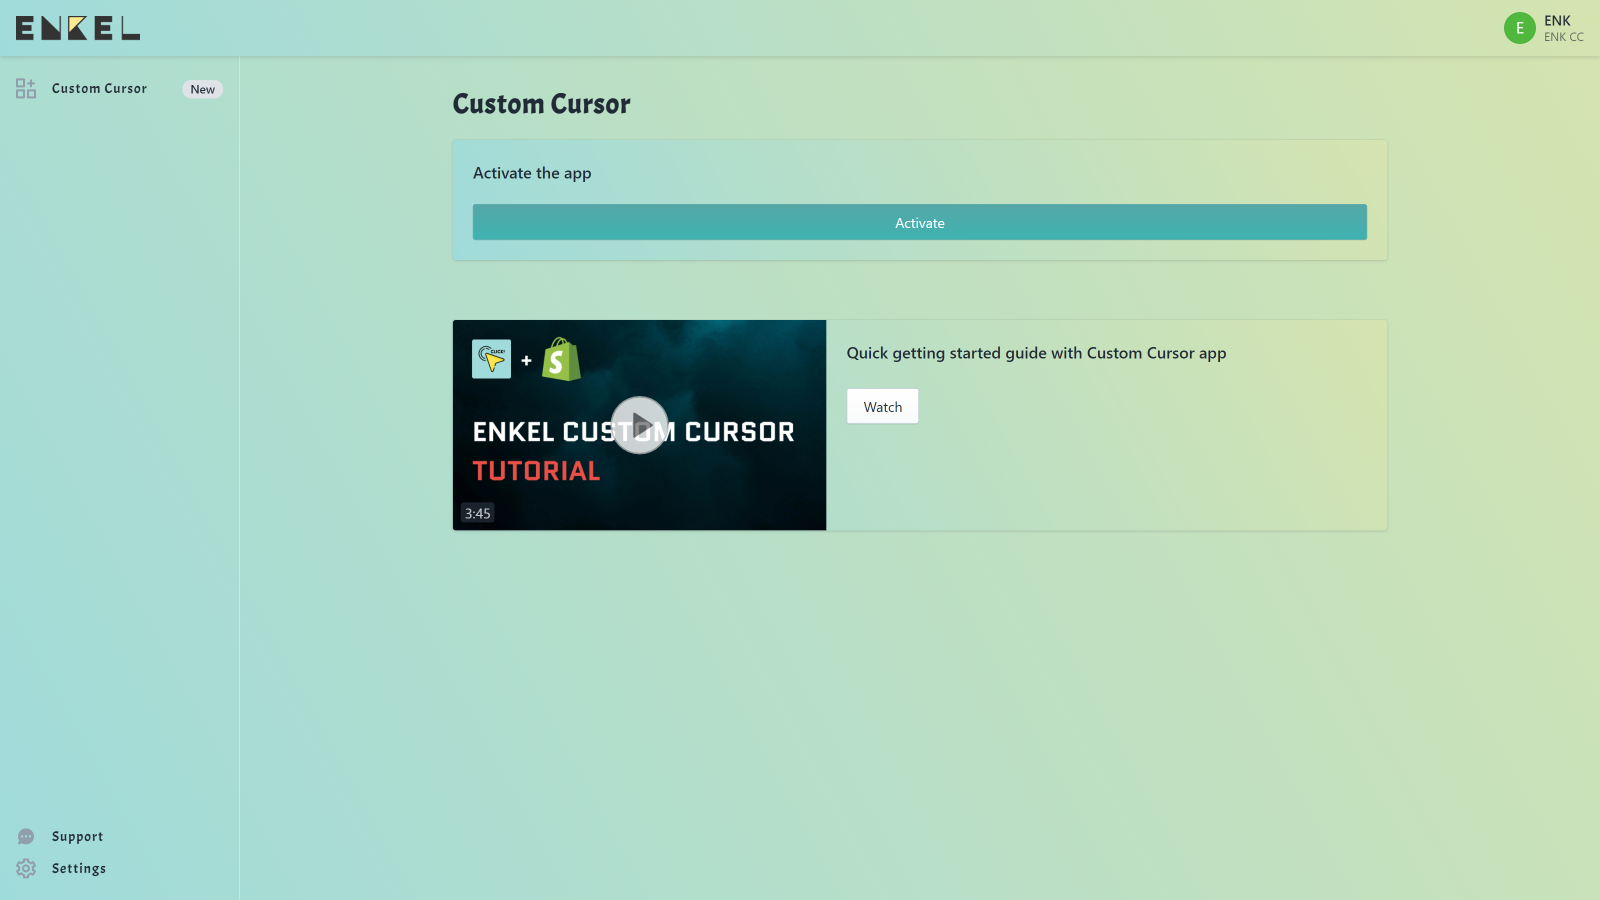 ENKEL Custom Cursor App